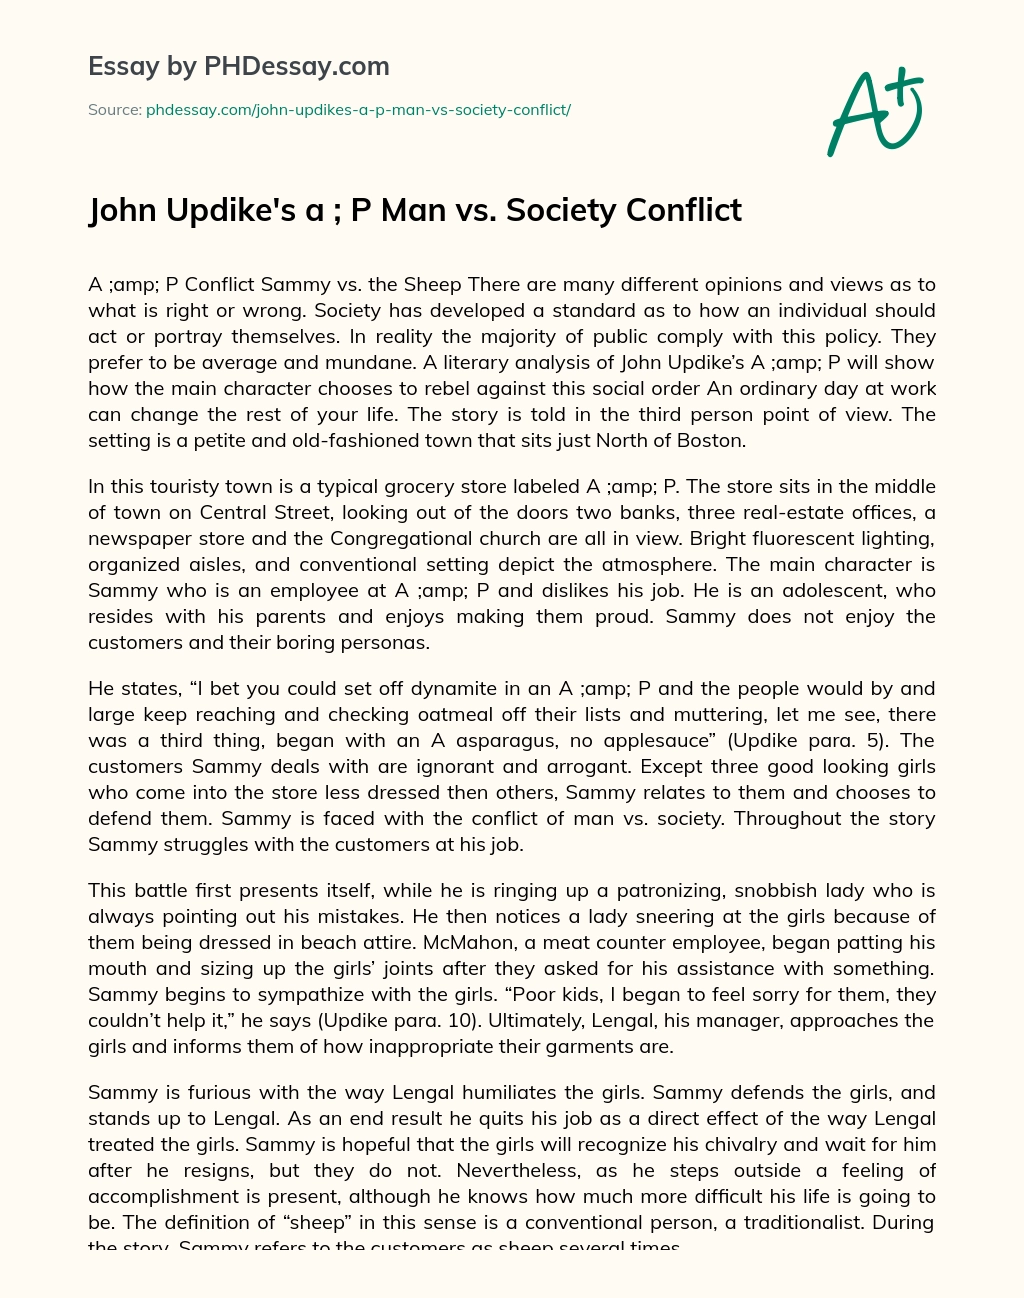 John Updike’s a ; P Man vs. Society Conflict essay